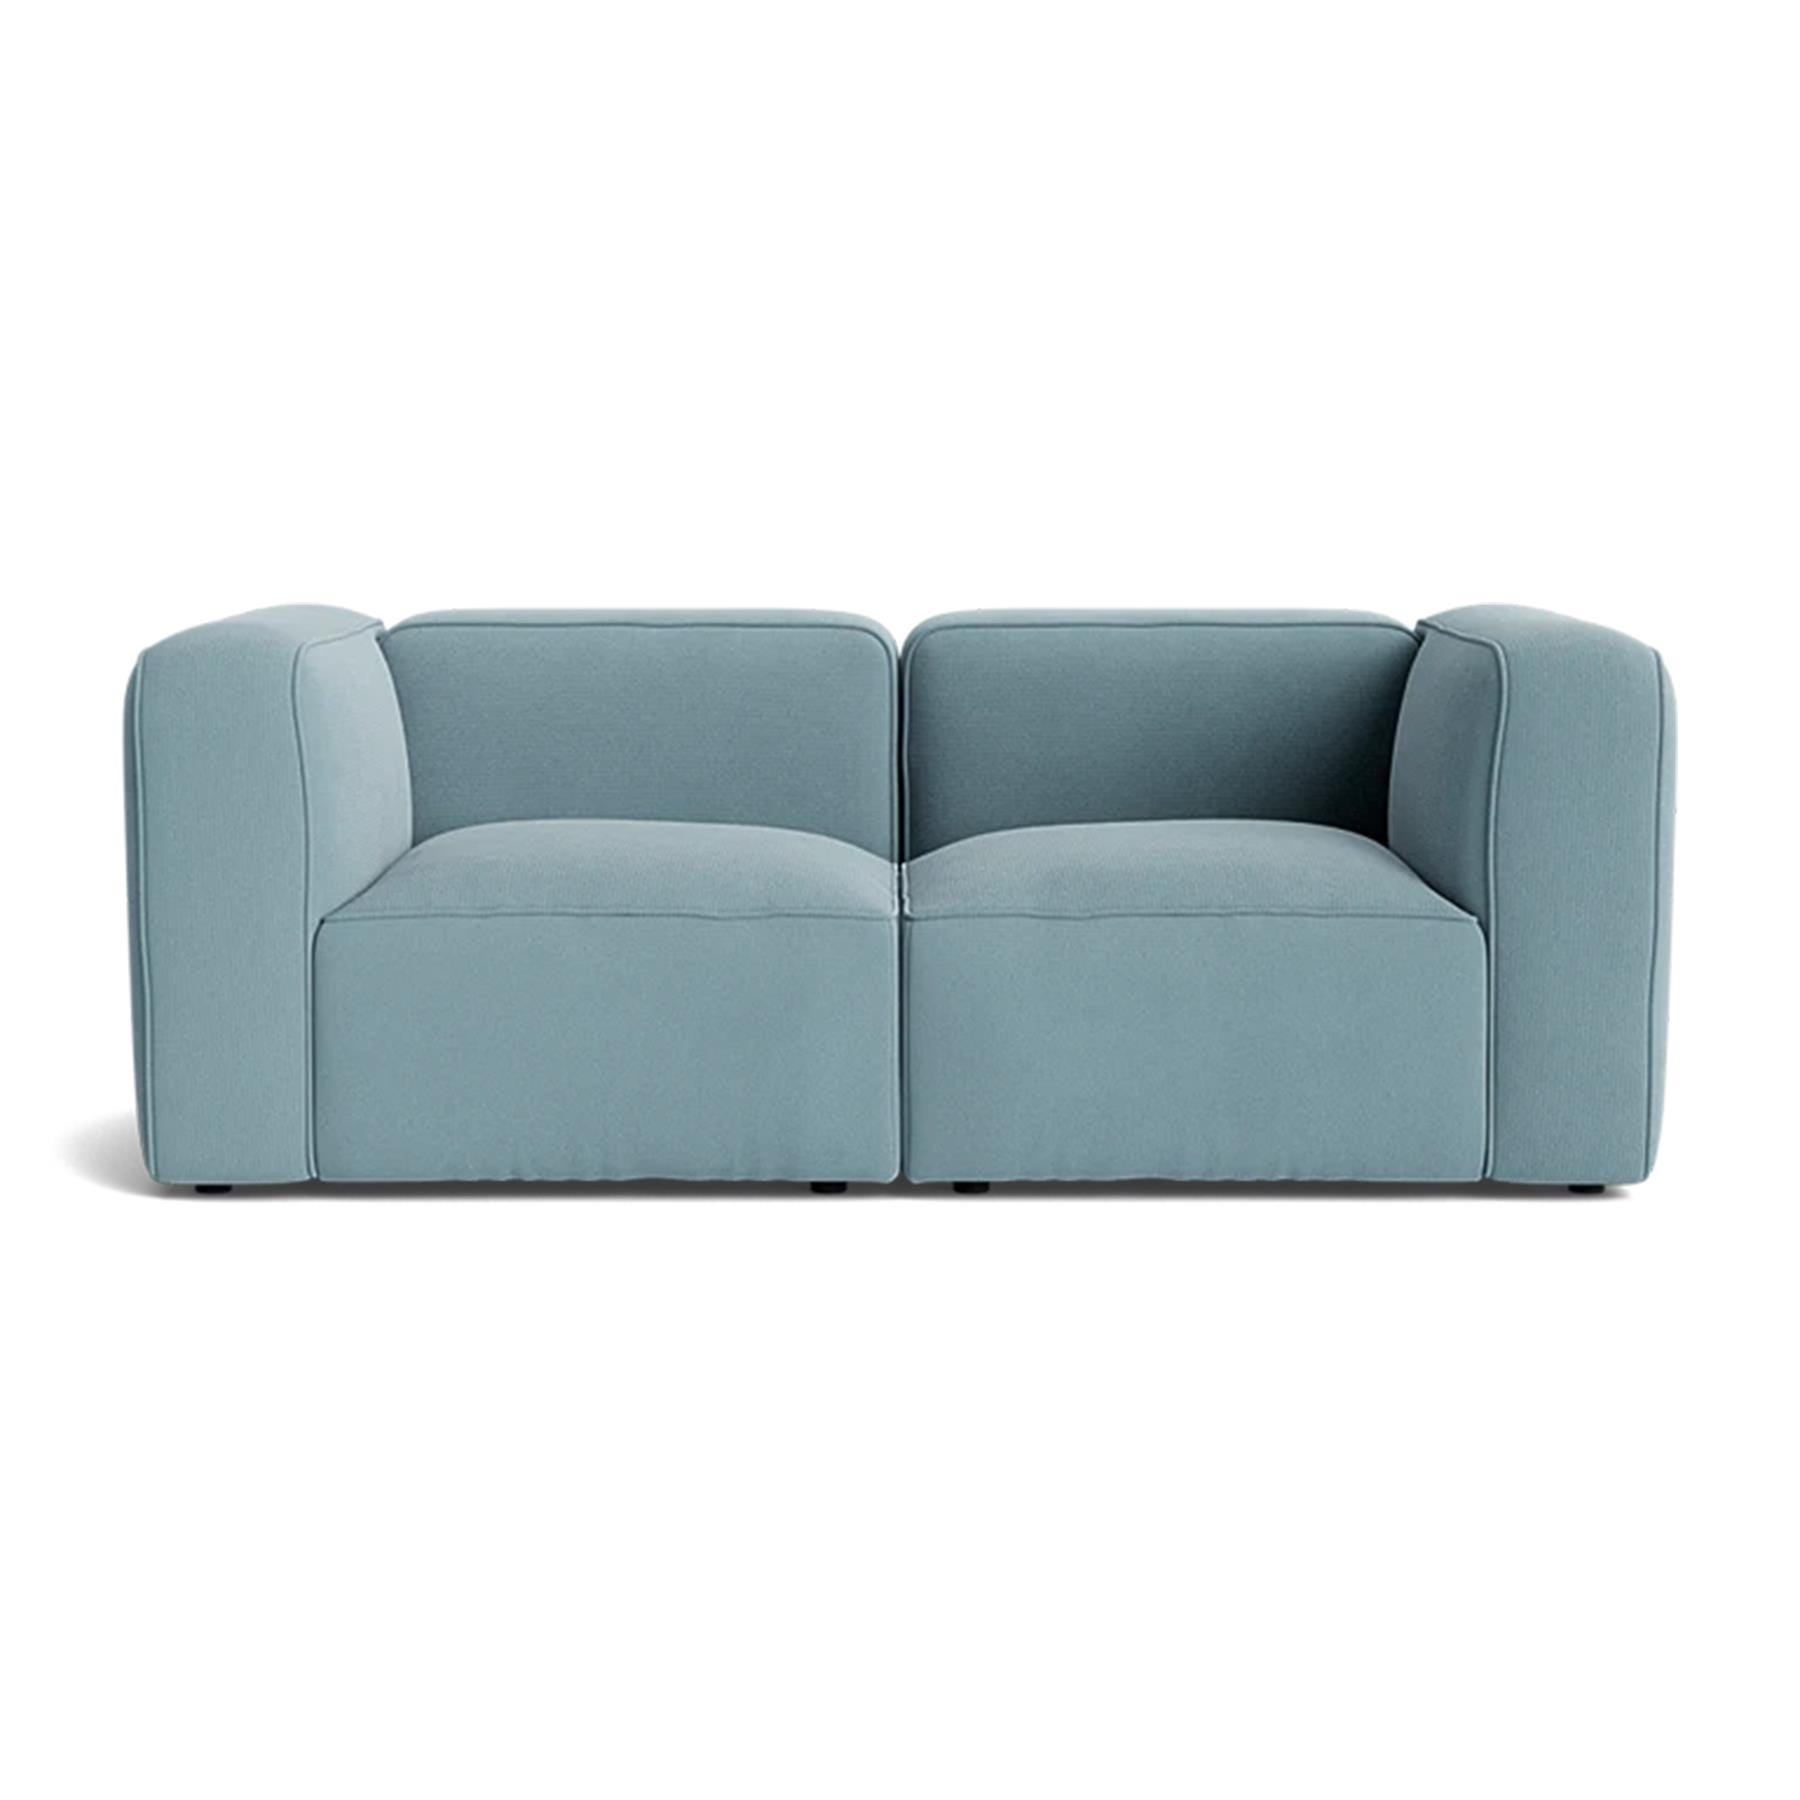 Make Nordic Basecamp 2 Seater Sofa Nordic Velvet 150 Blue Designer Furniture From Holloways Of Ludlow